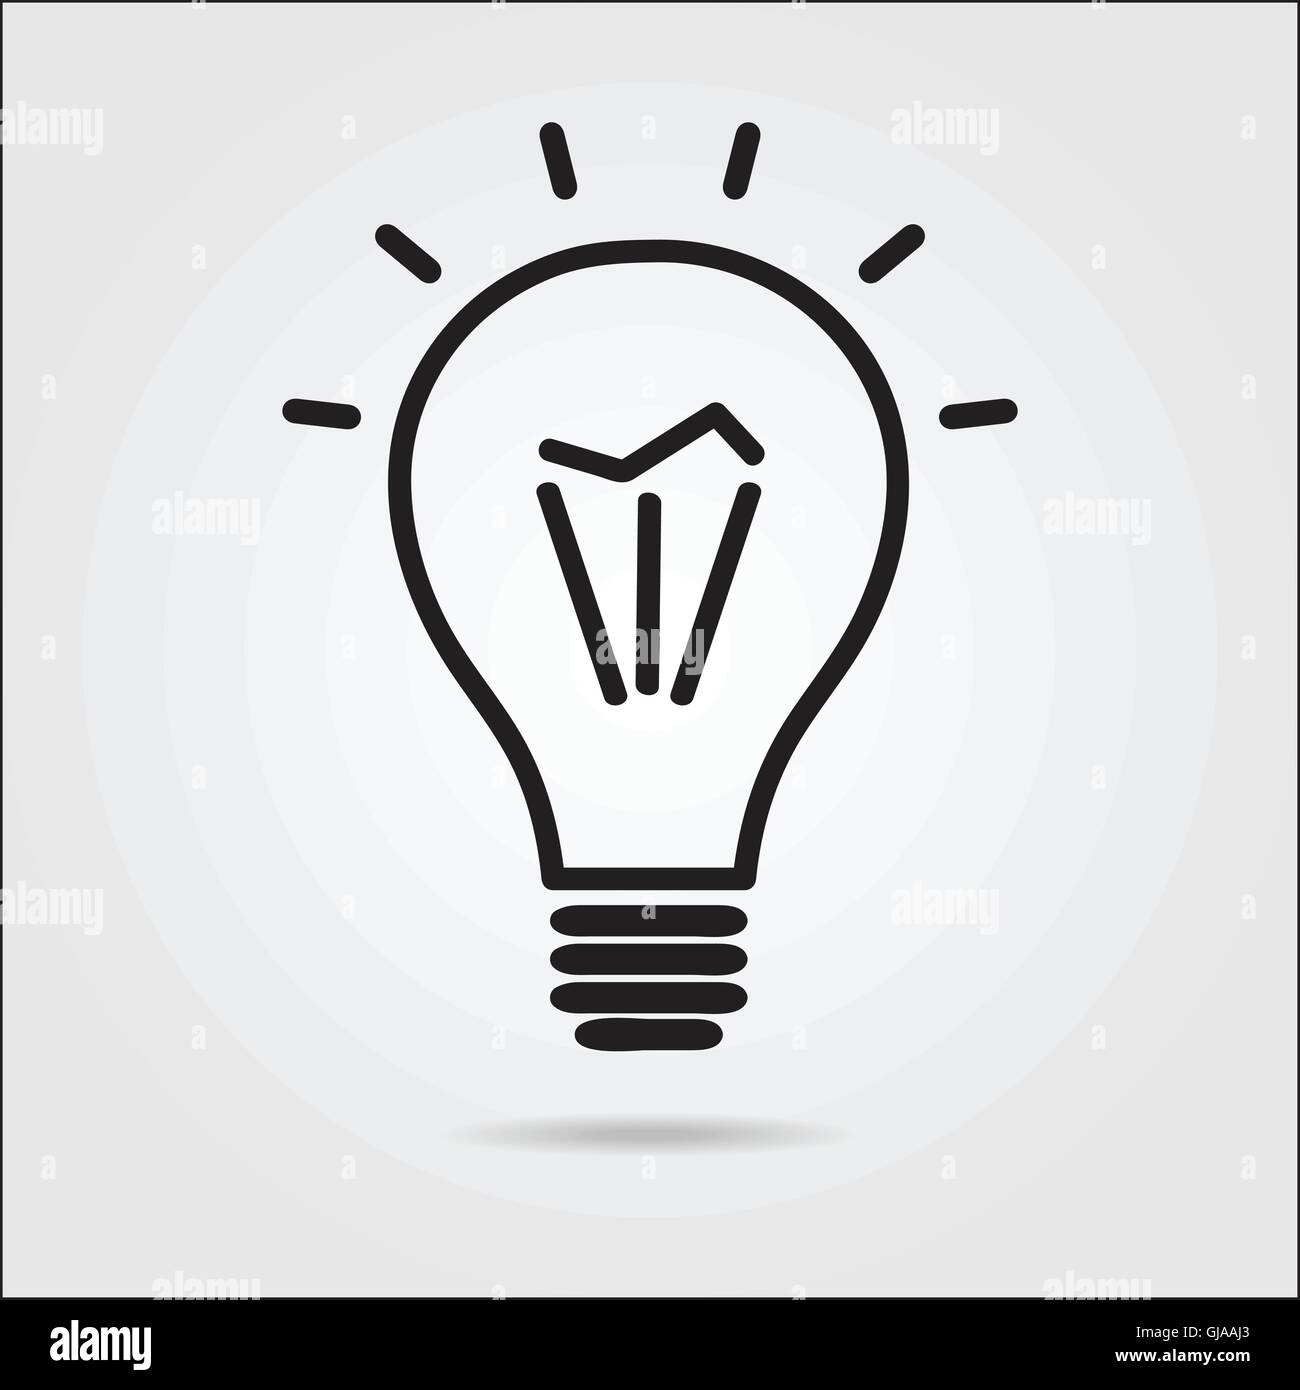 Light bulb logo icon drawn in the manual Stock Vector